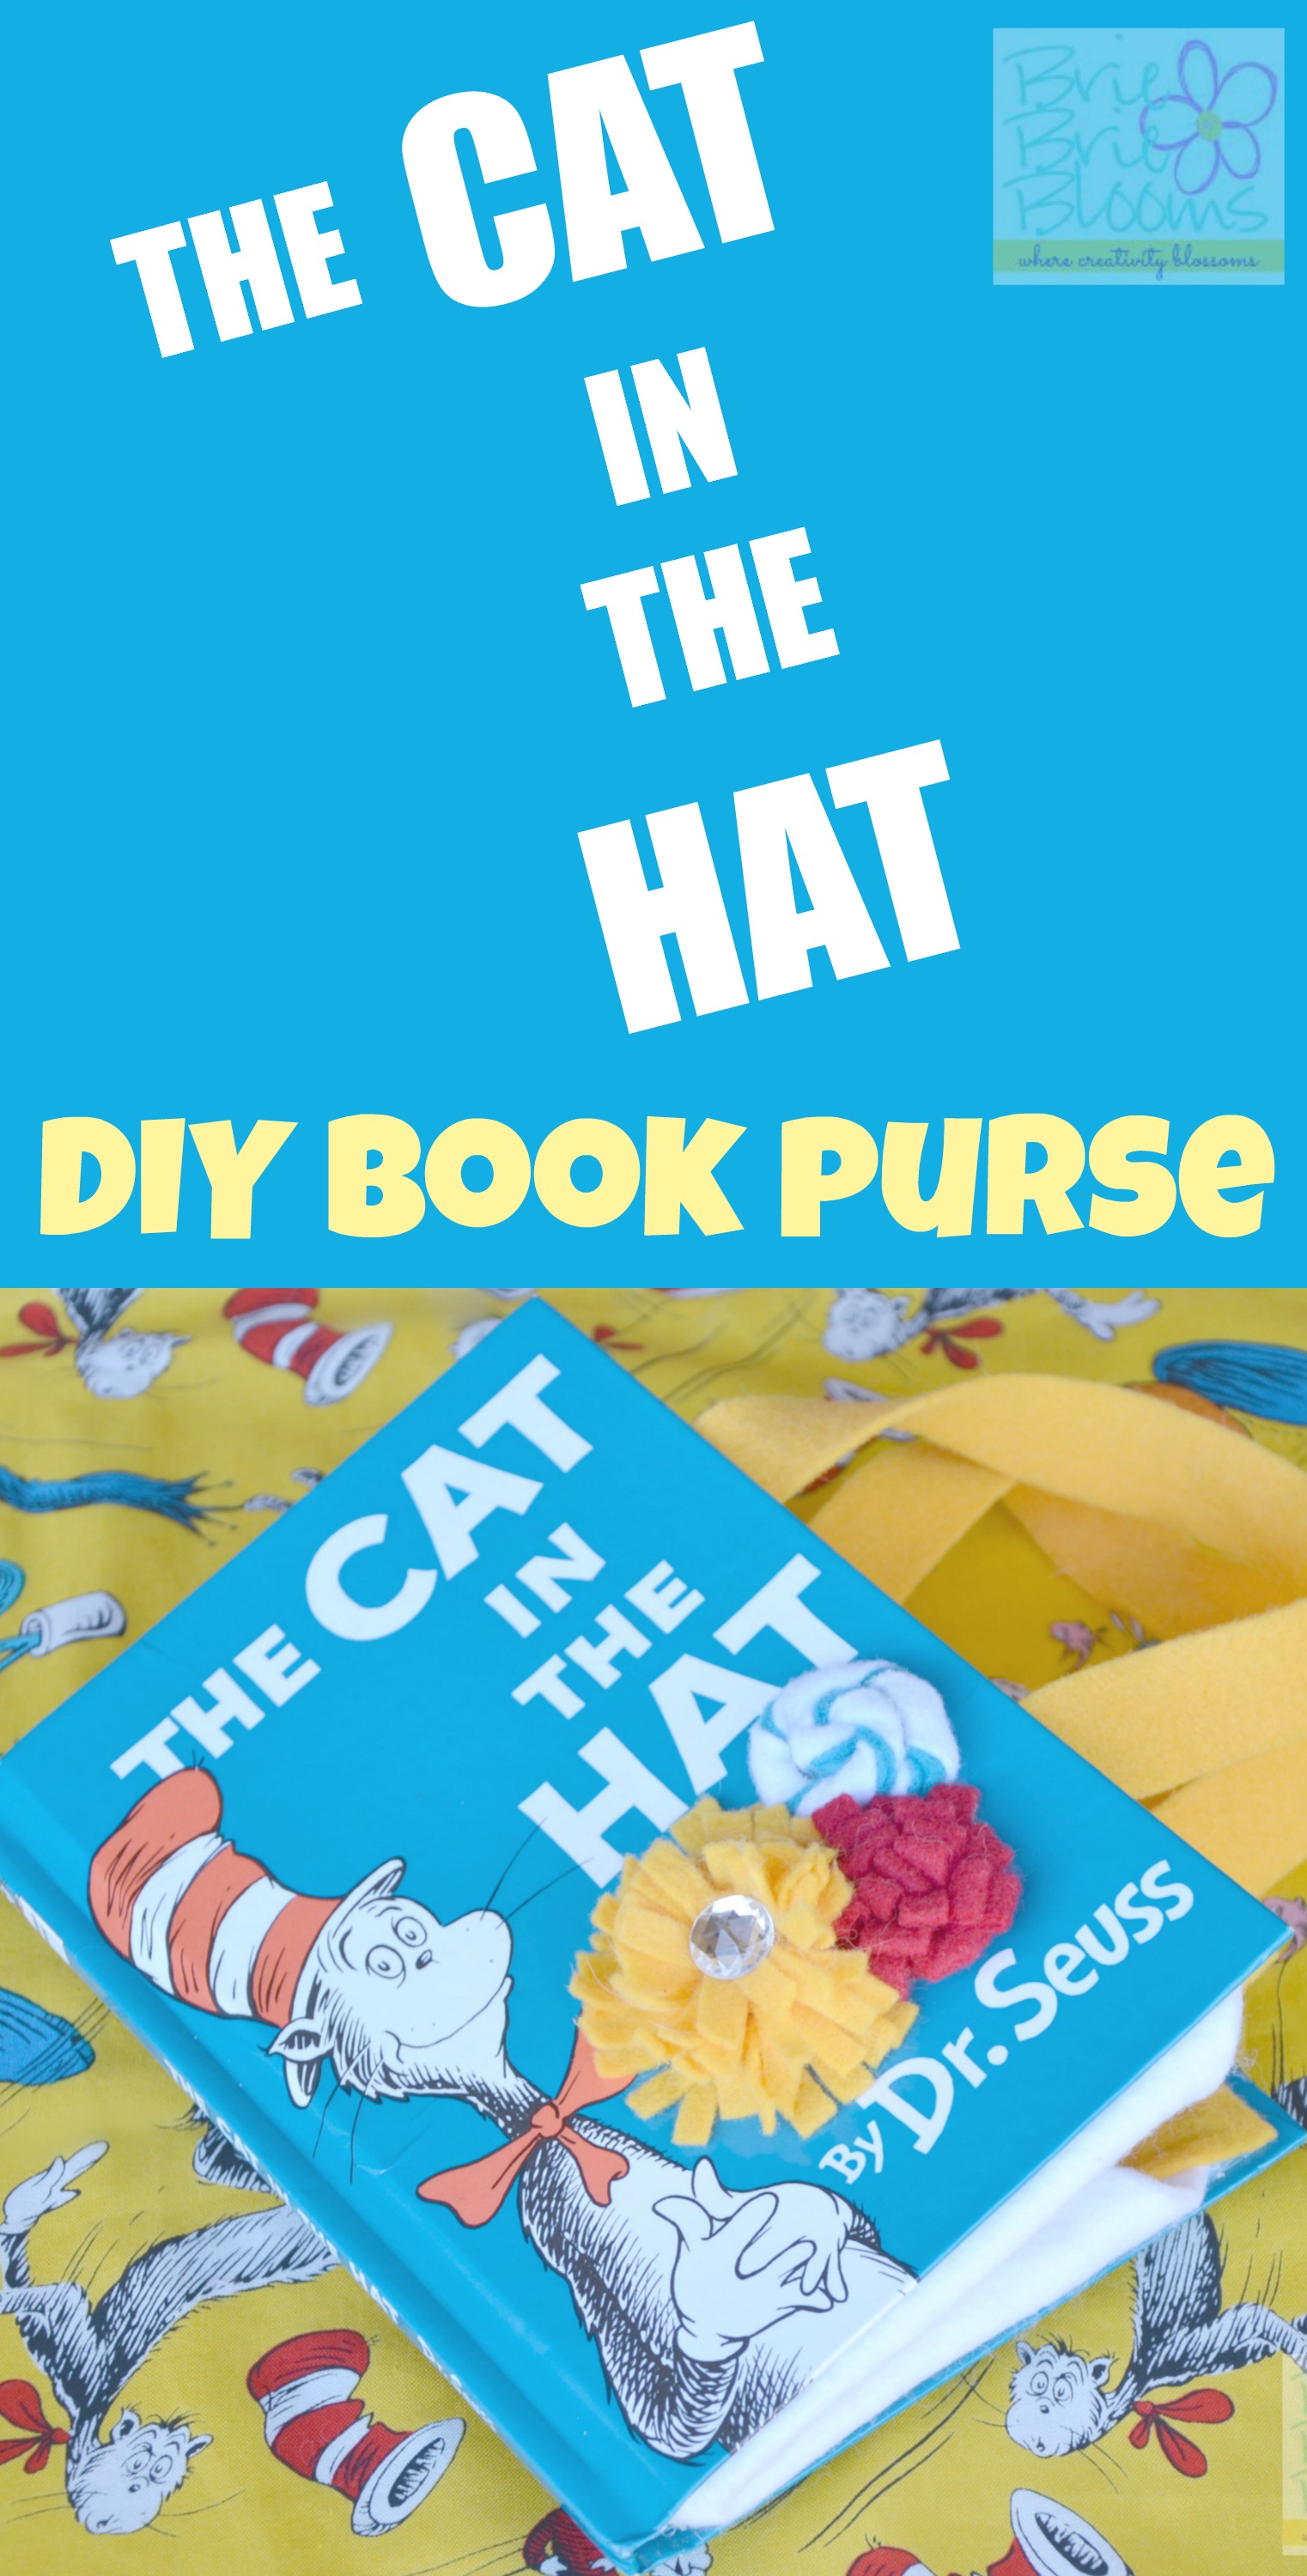 The Cat in the Hat DIY book purse